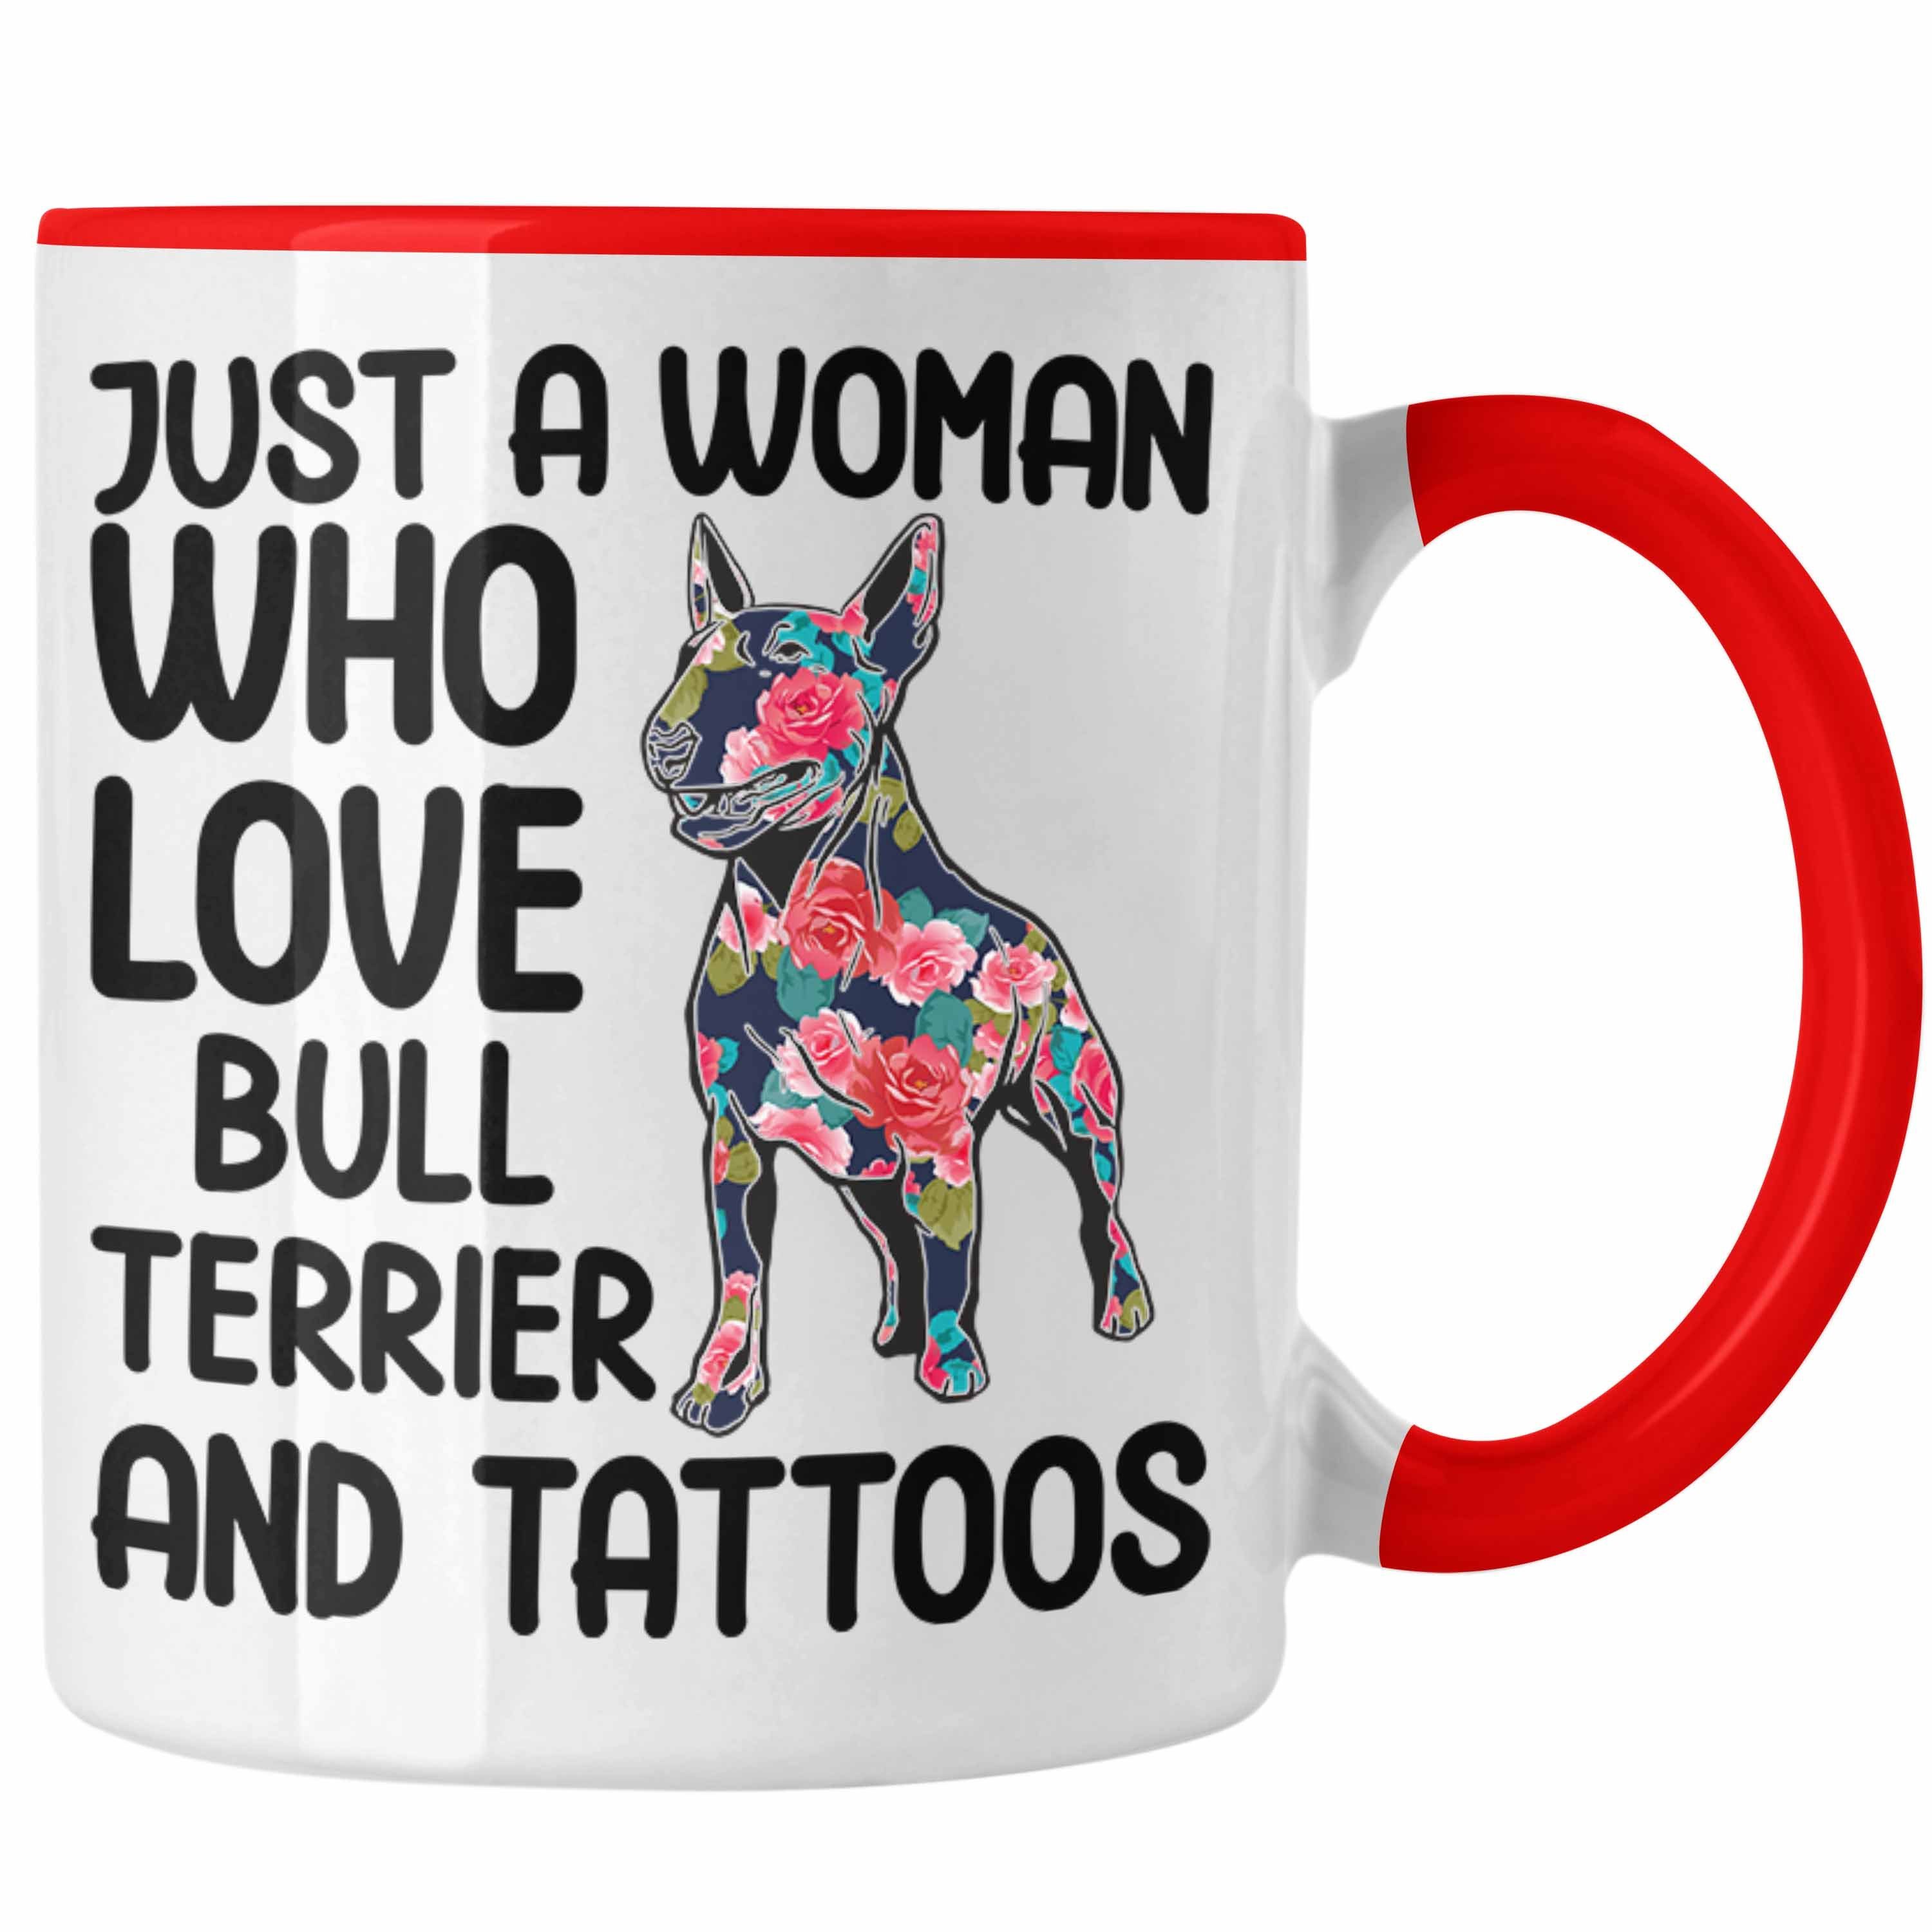 Bullterrier Tattoo A Who Woman Bullterrier Tattoos Tasse Loves Trendation Terrier Frauen Just Trendation and Geschenk Rot Tasse Geschenk - Bull Besitzerin